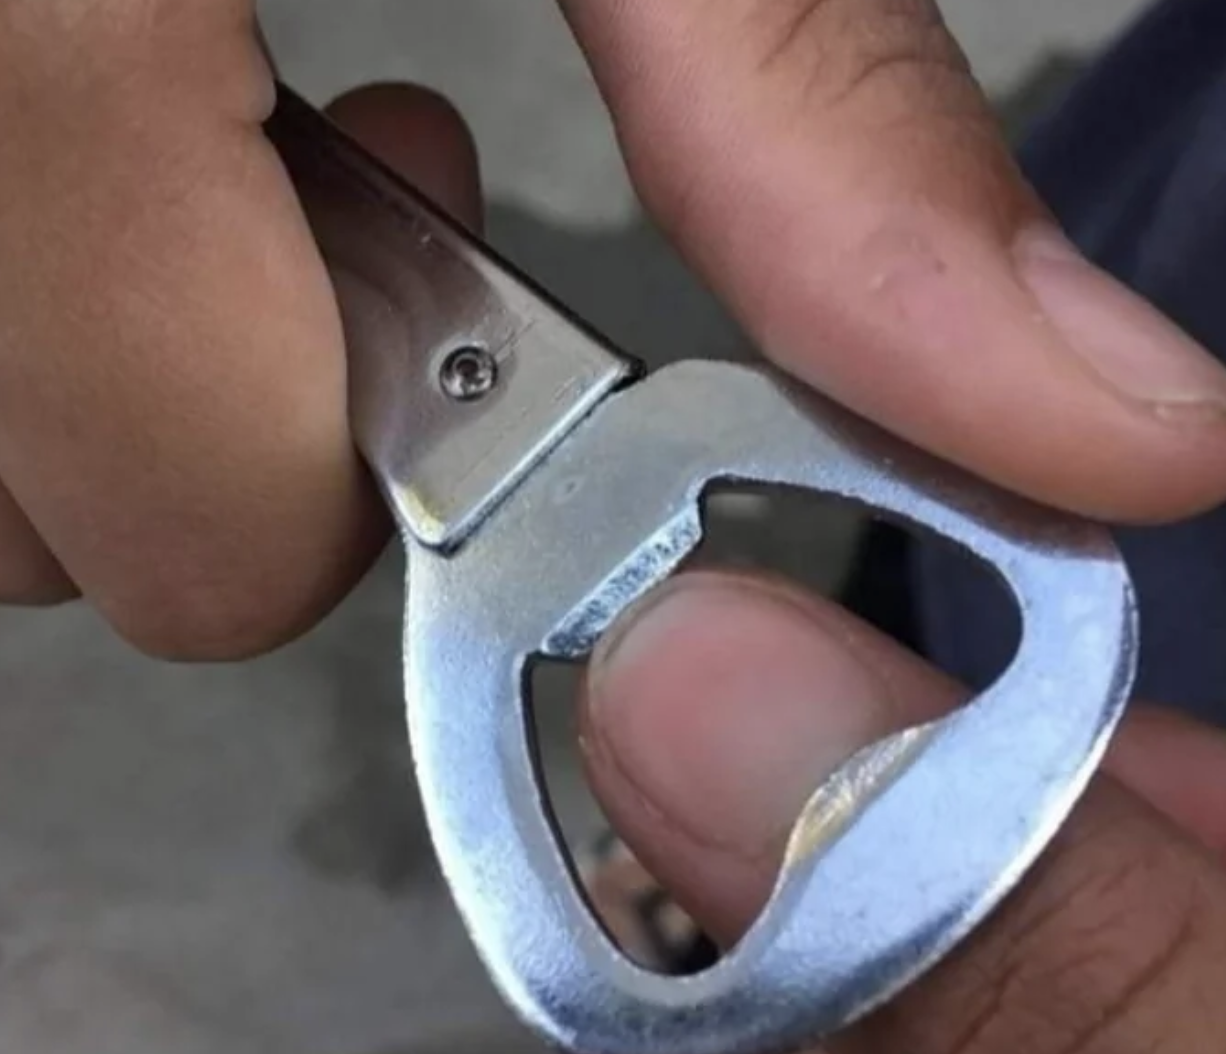 A close-up of a hand using a metallic bottle opener to open a bottle cap